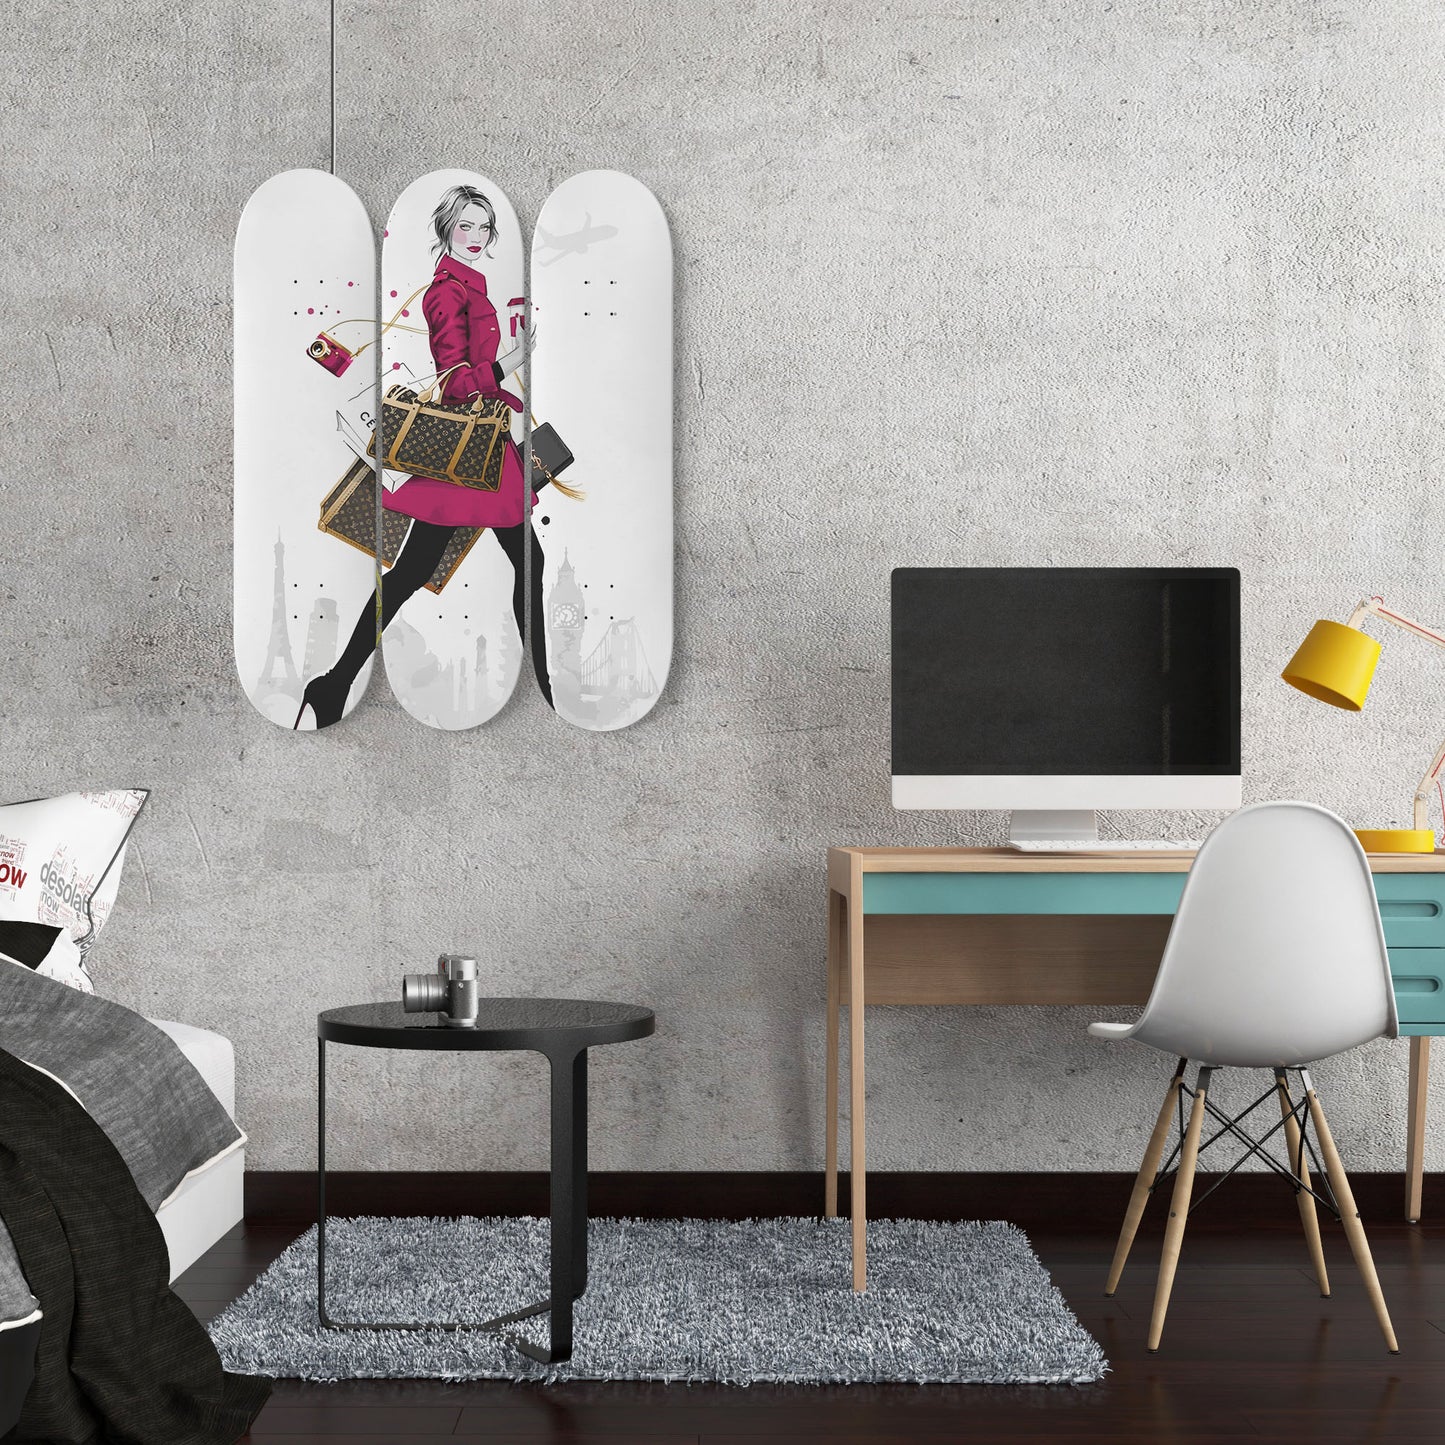 Fashion 6 | 3 Set of Skateboard Deck Wall Art | Wall Hanging Room Decor | Maple Wood | Birthday Gift